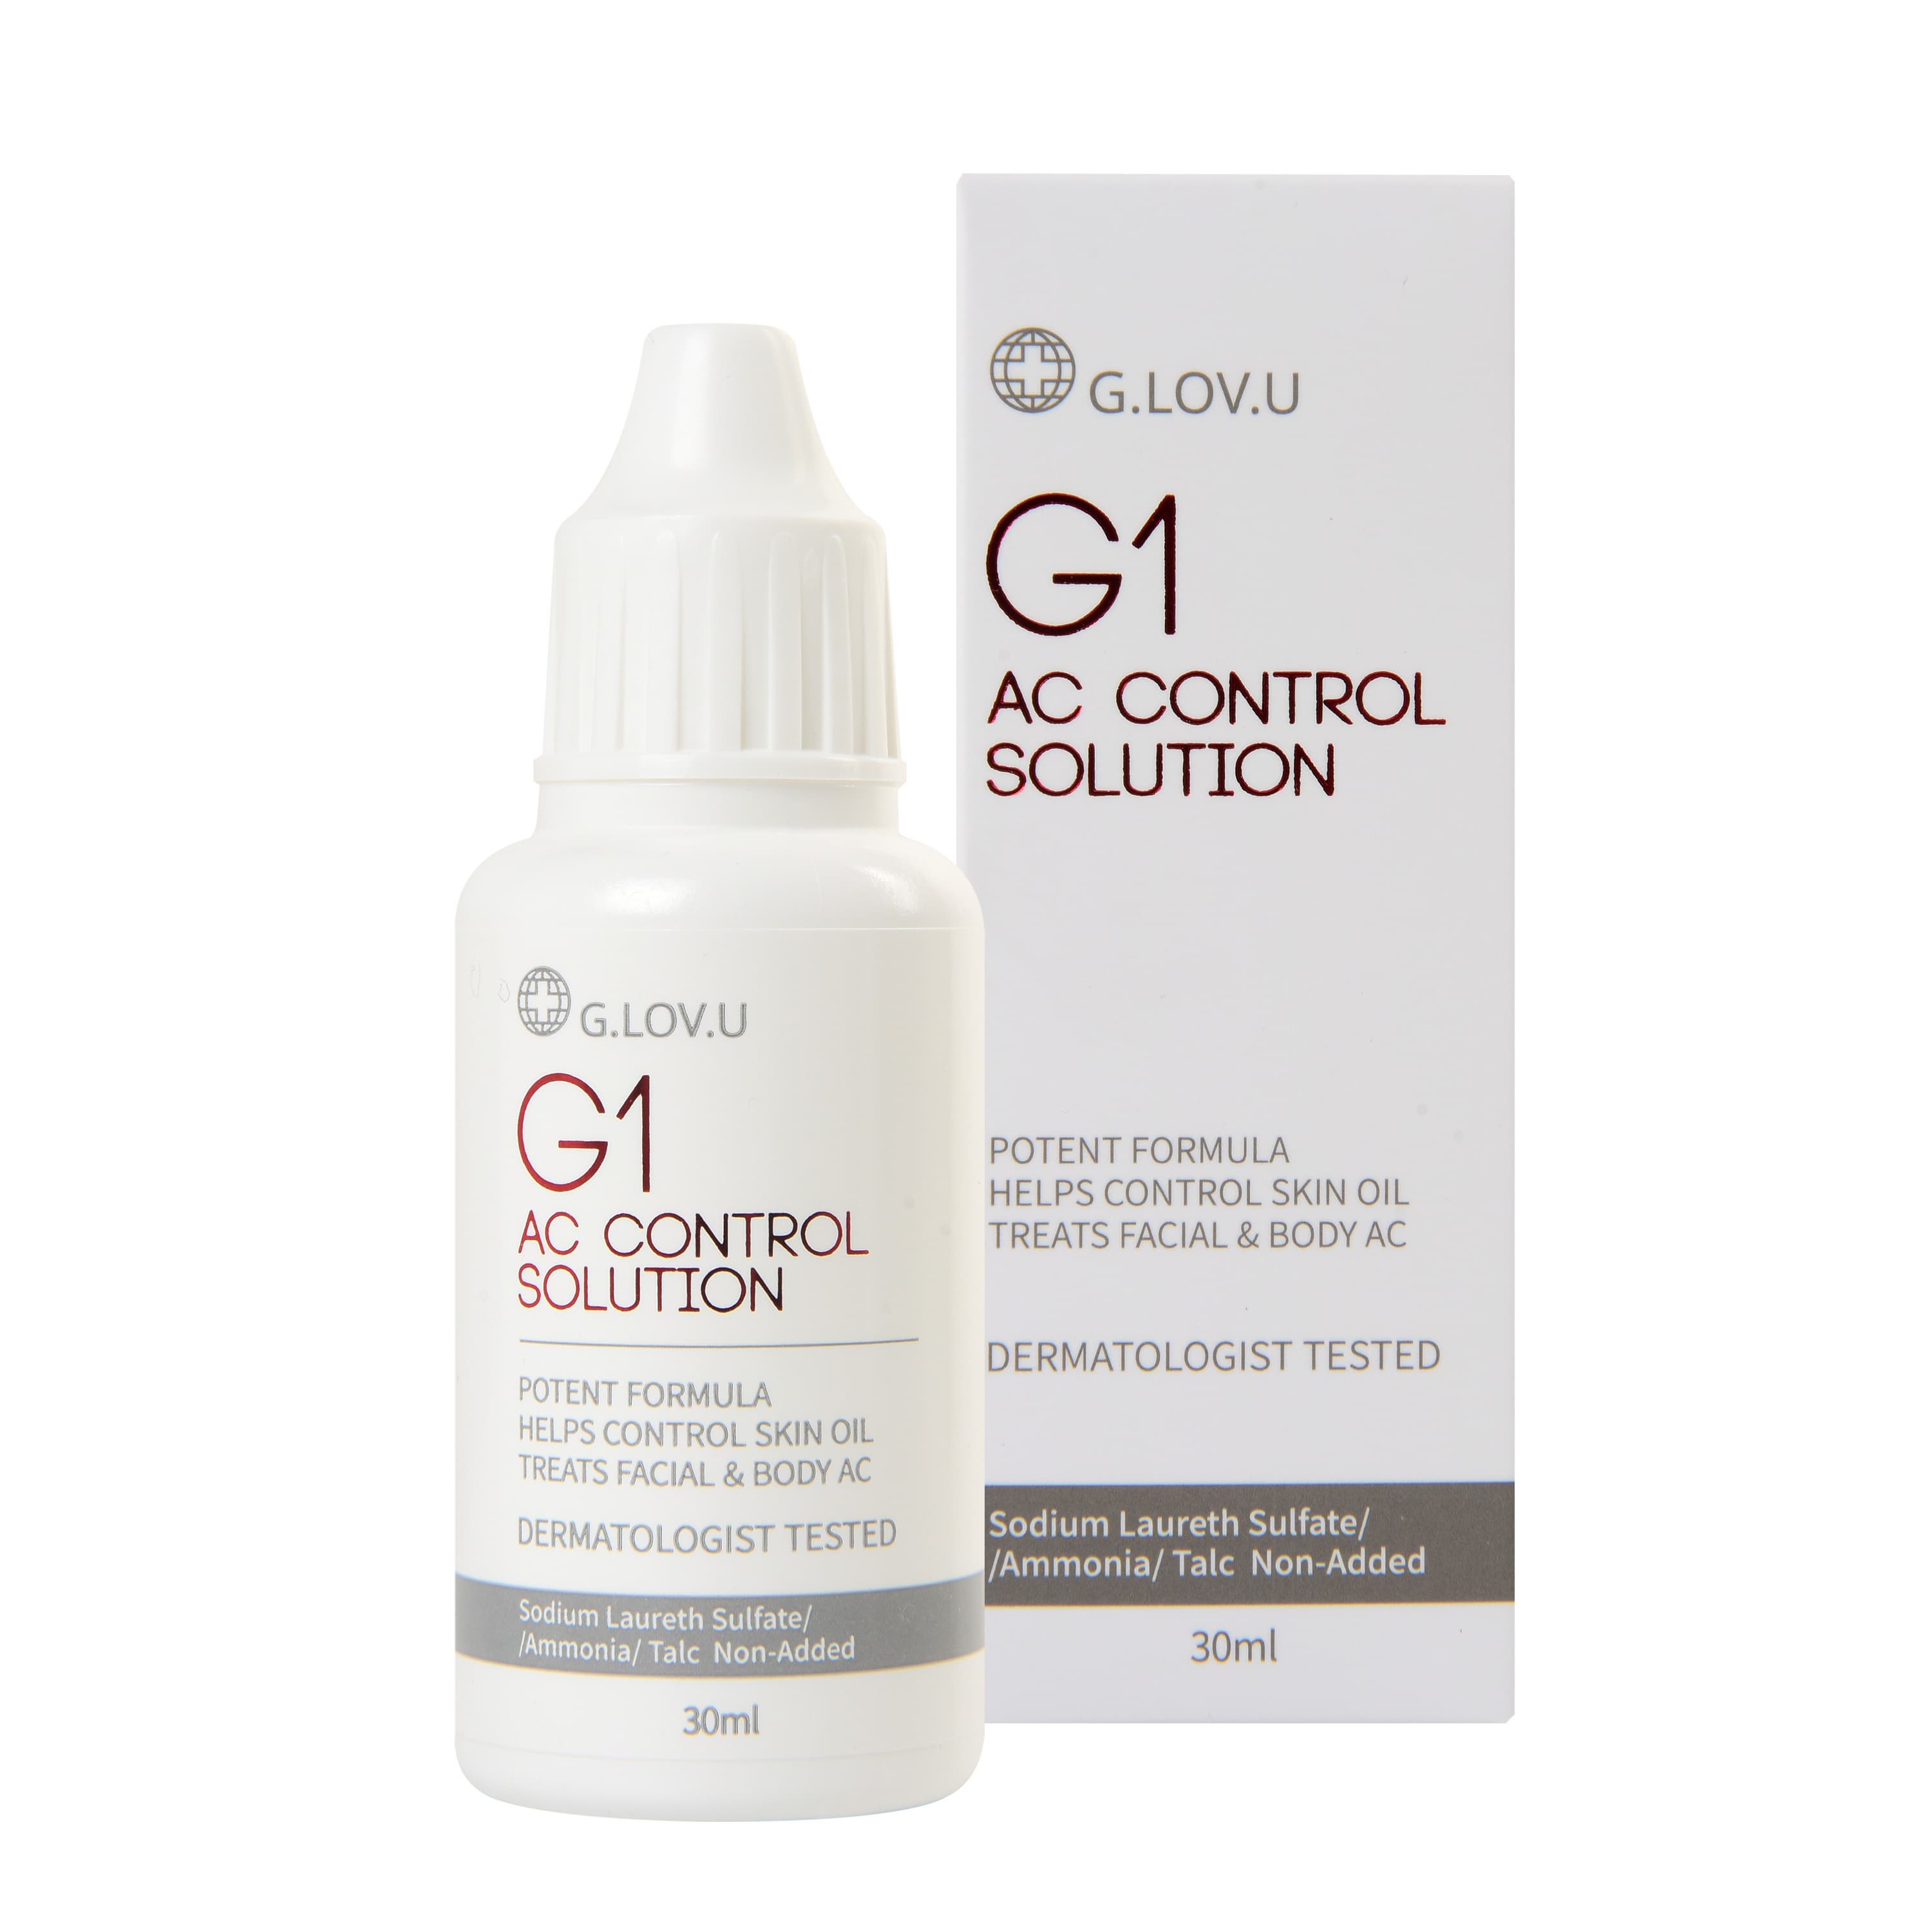 G1 AC CONTROL SOLUTION _ Acne care _ Sebum Control Cosmetic